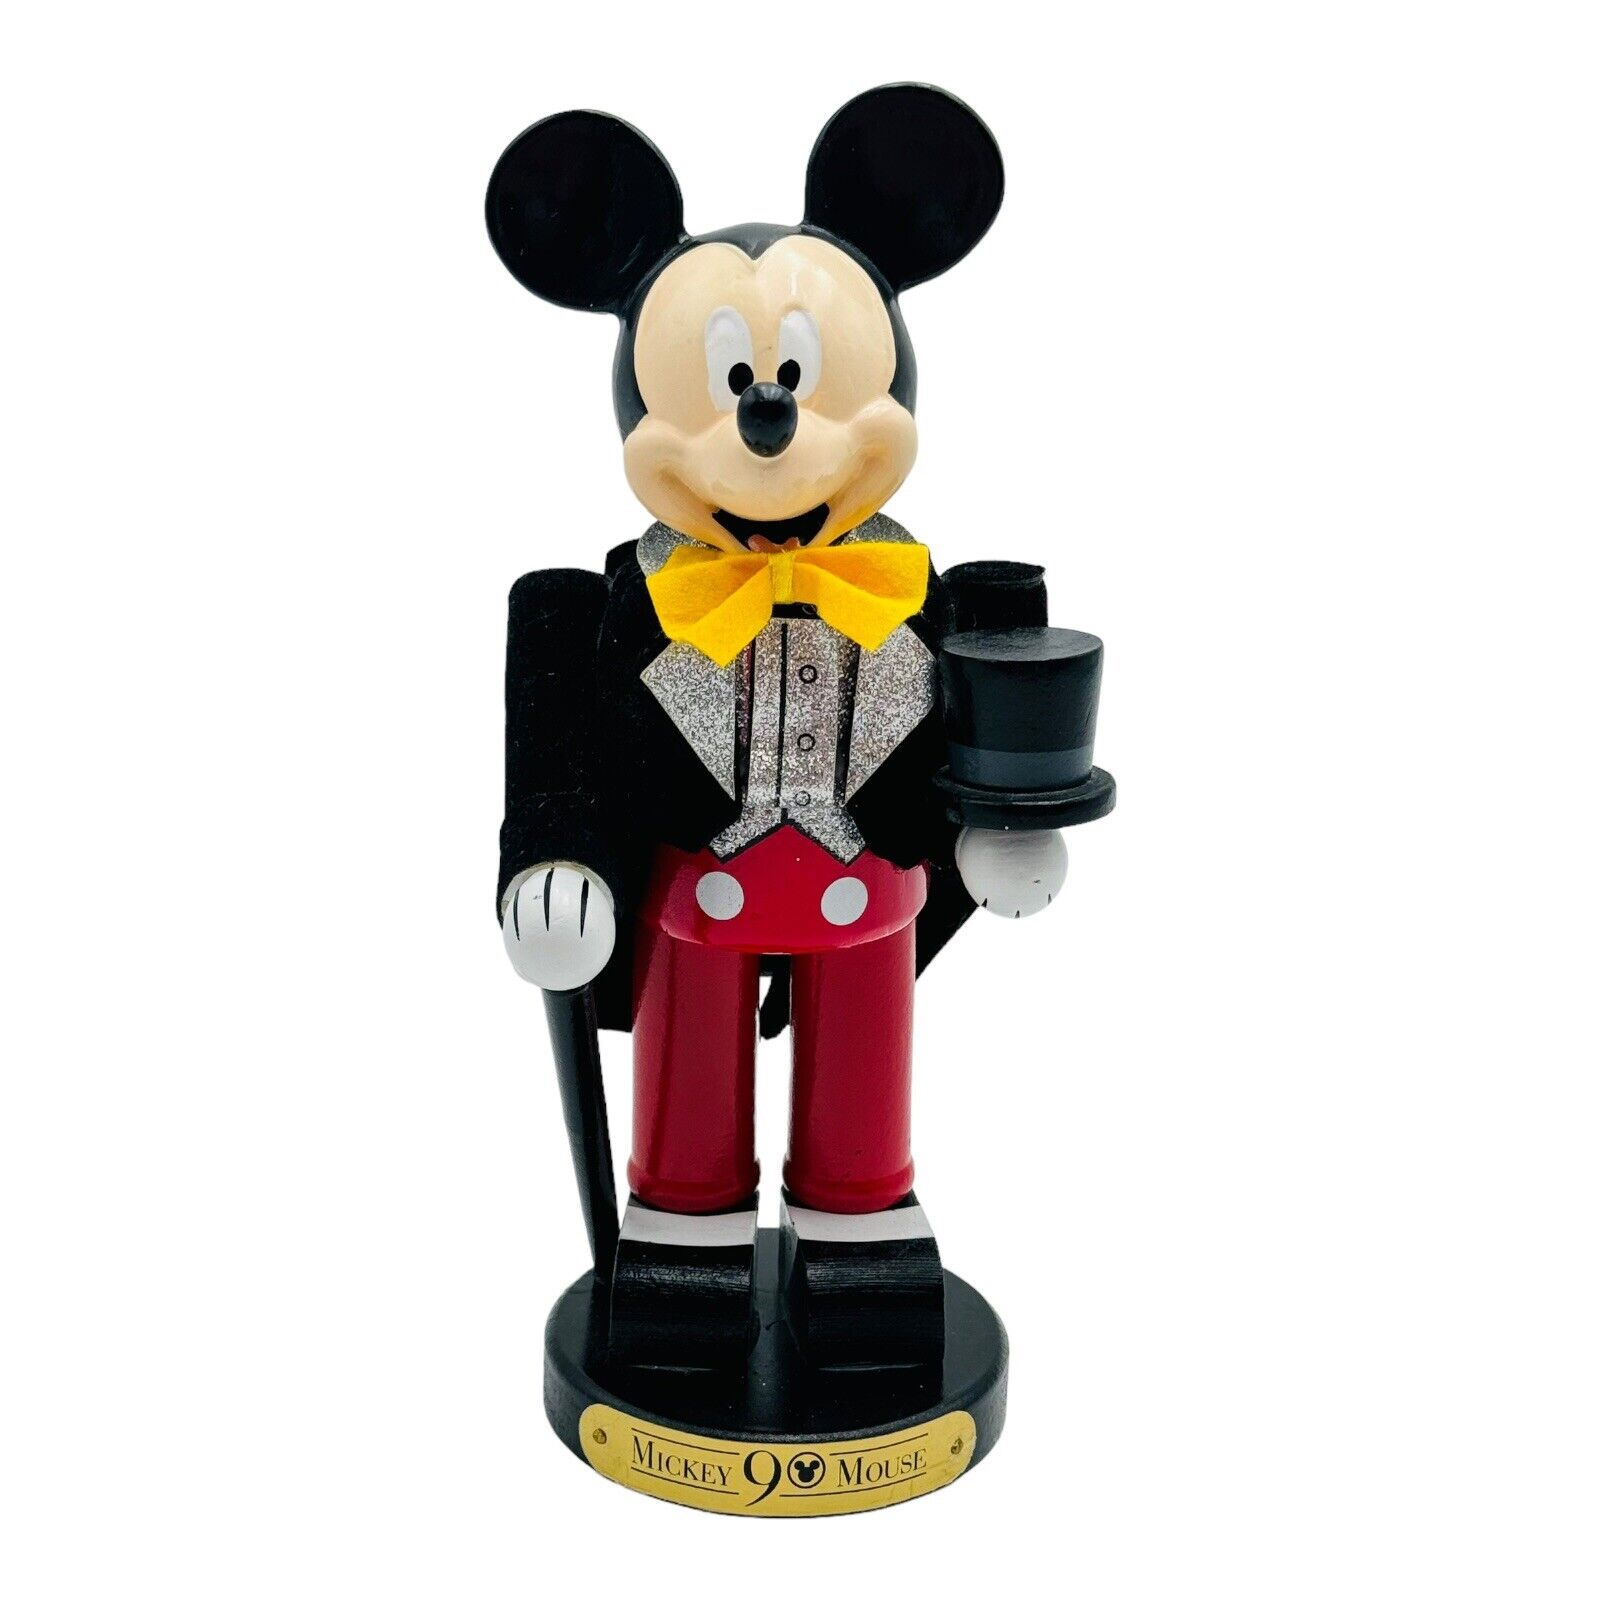 Kurt S. Adler Disney's Mickey Mouse 90th Birthday Wooden Nutcracker 10” Tall